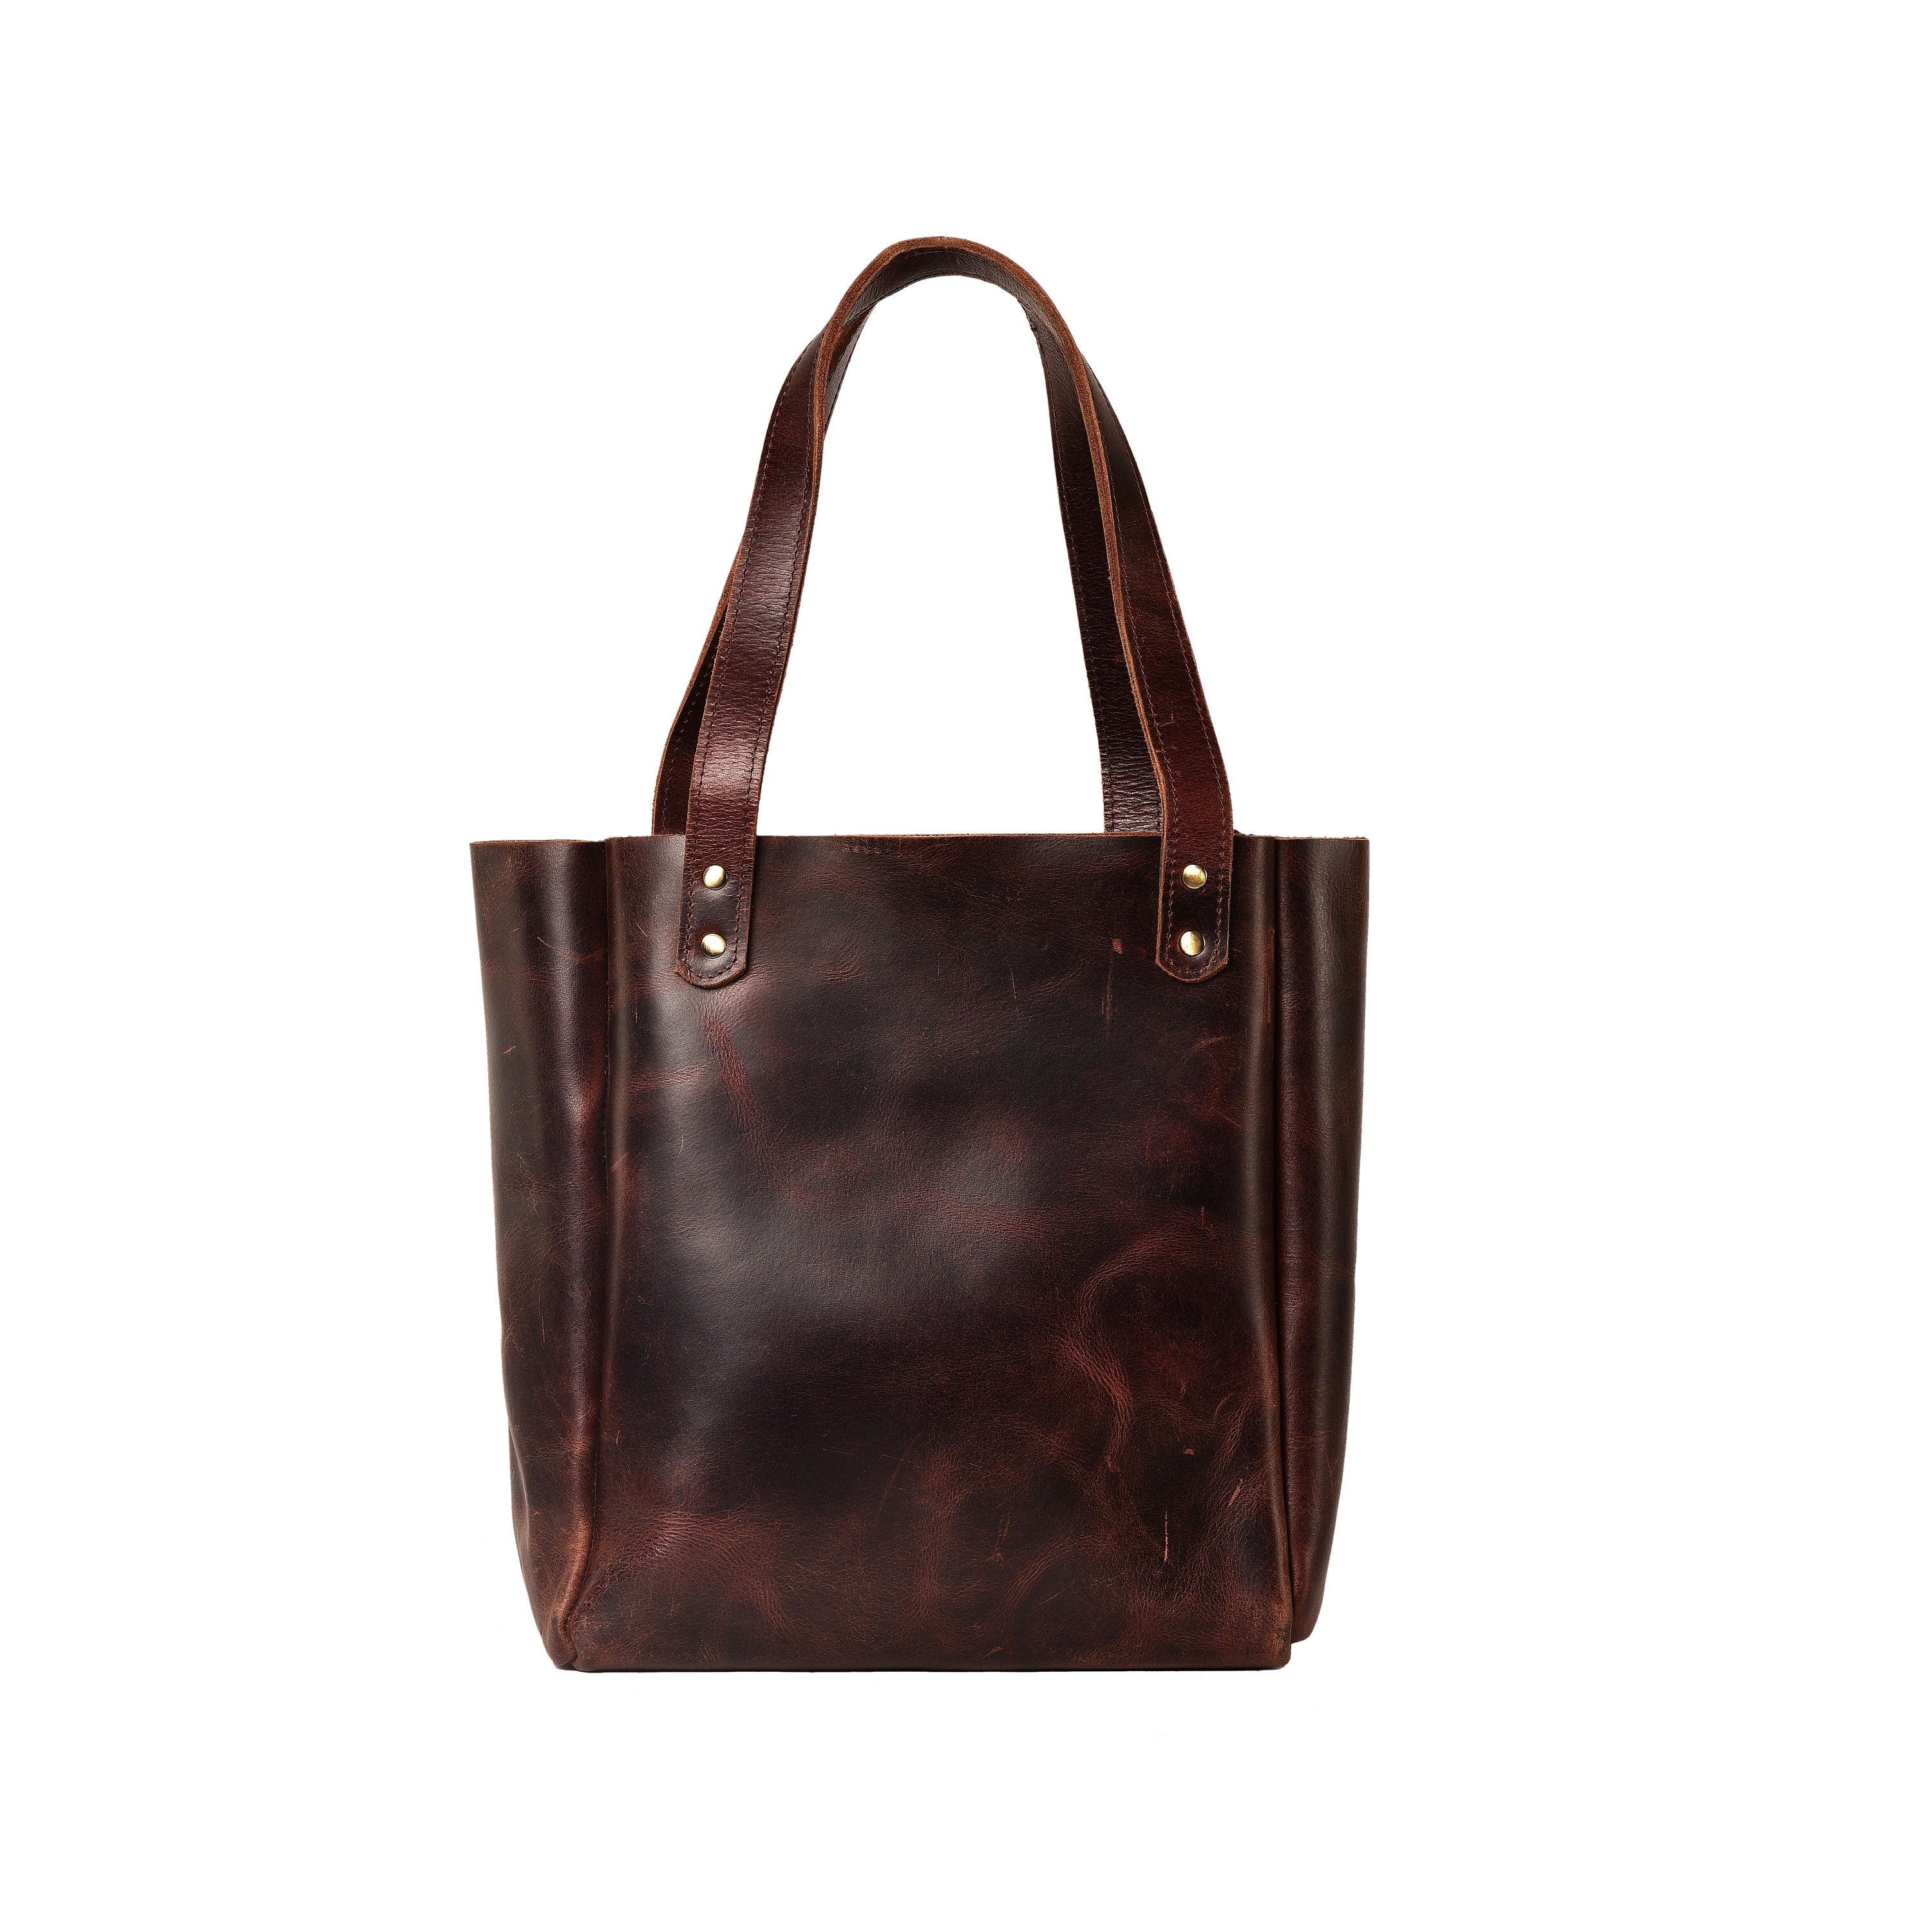 MAZZINI Dark Brown Leather Purse Large Bag ITALY | eBay